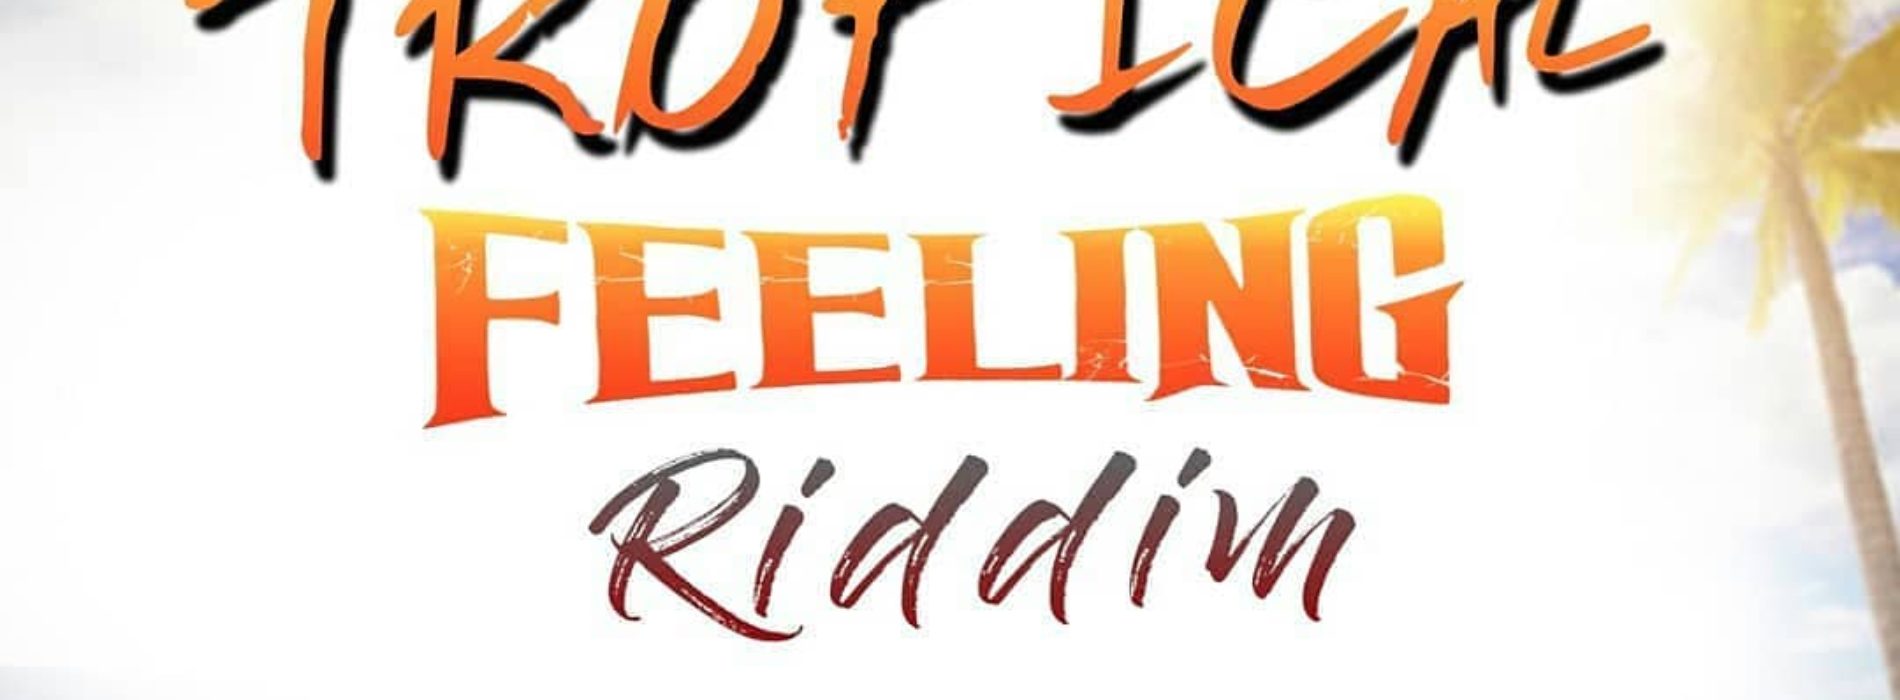 Tropical Feeling Riddim Mix (Full) Feat. Bugle, Ce’cile, Devin Di Dakta – Septembre 2018